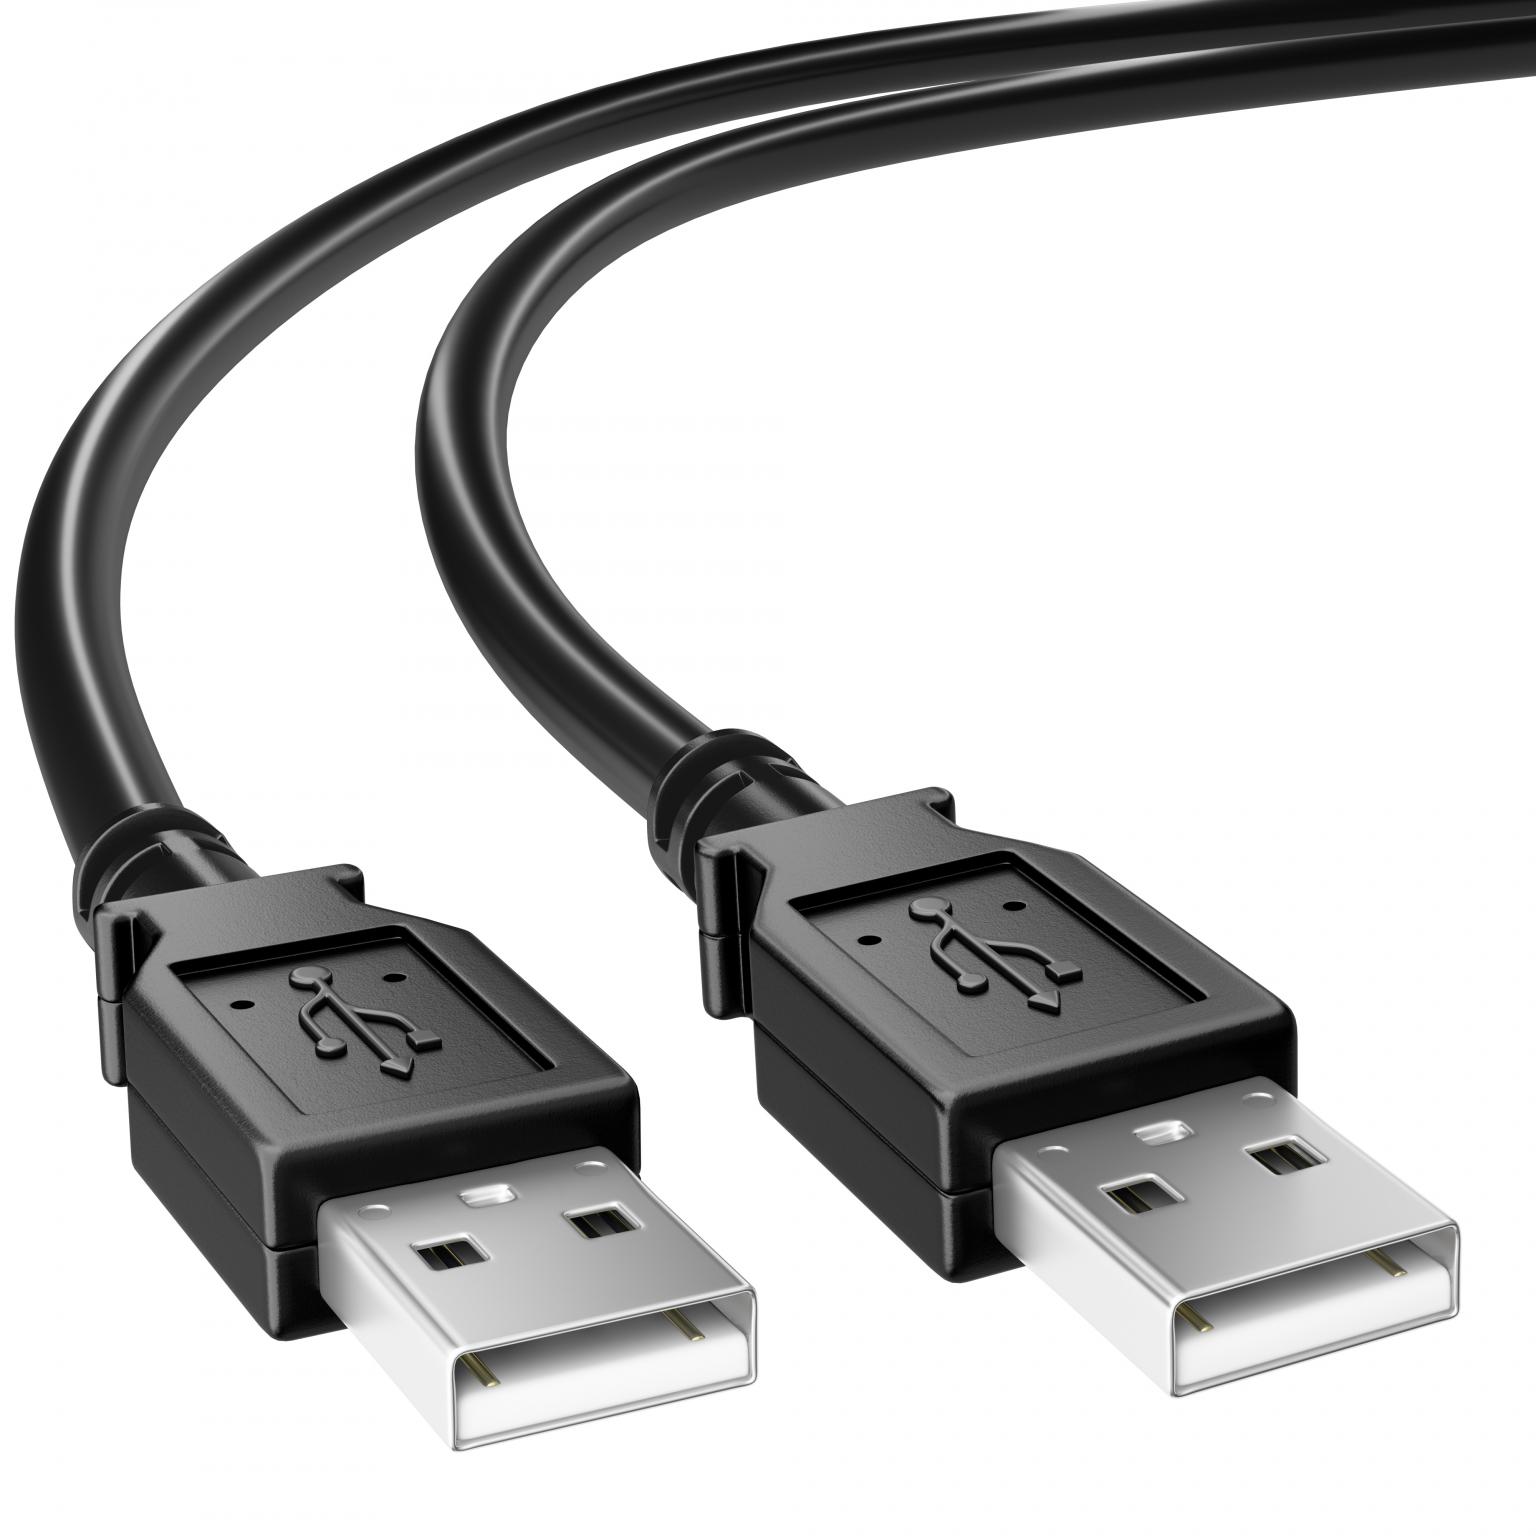 album piano Absurd USB 2.0 Kabel - USB 2.0 kabel, Connector 1: USB A male, Connector 2: USB A  male, 1.8 meter.